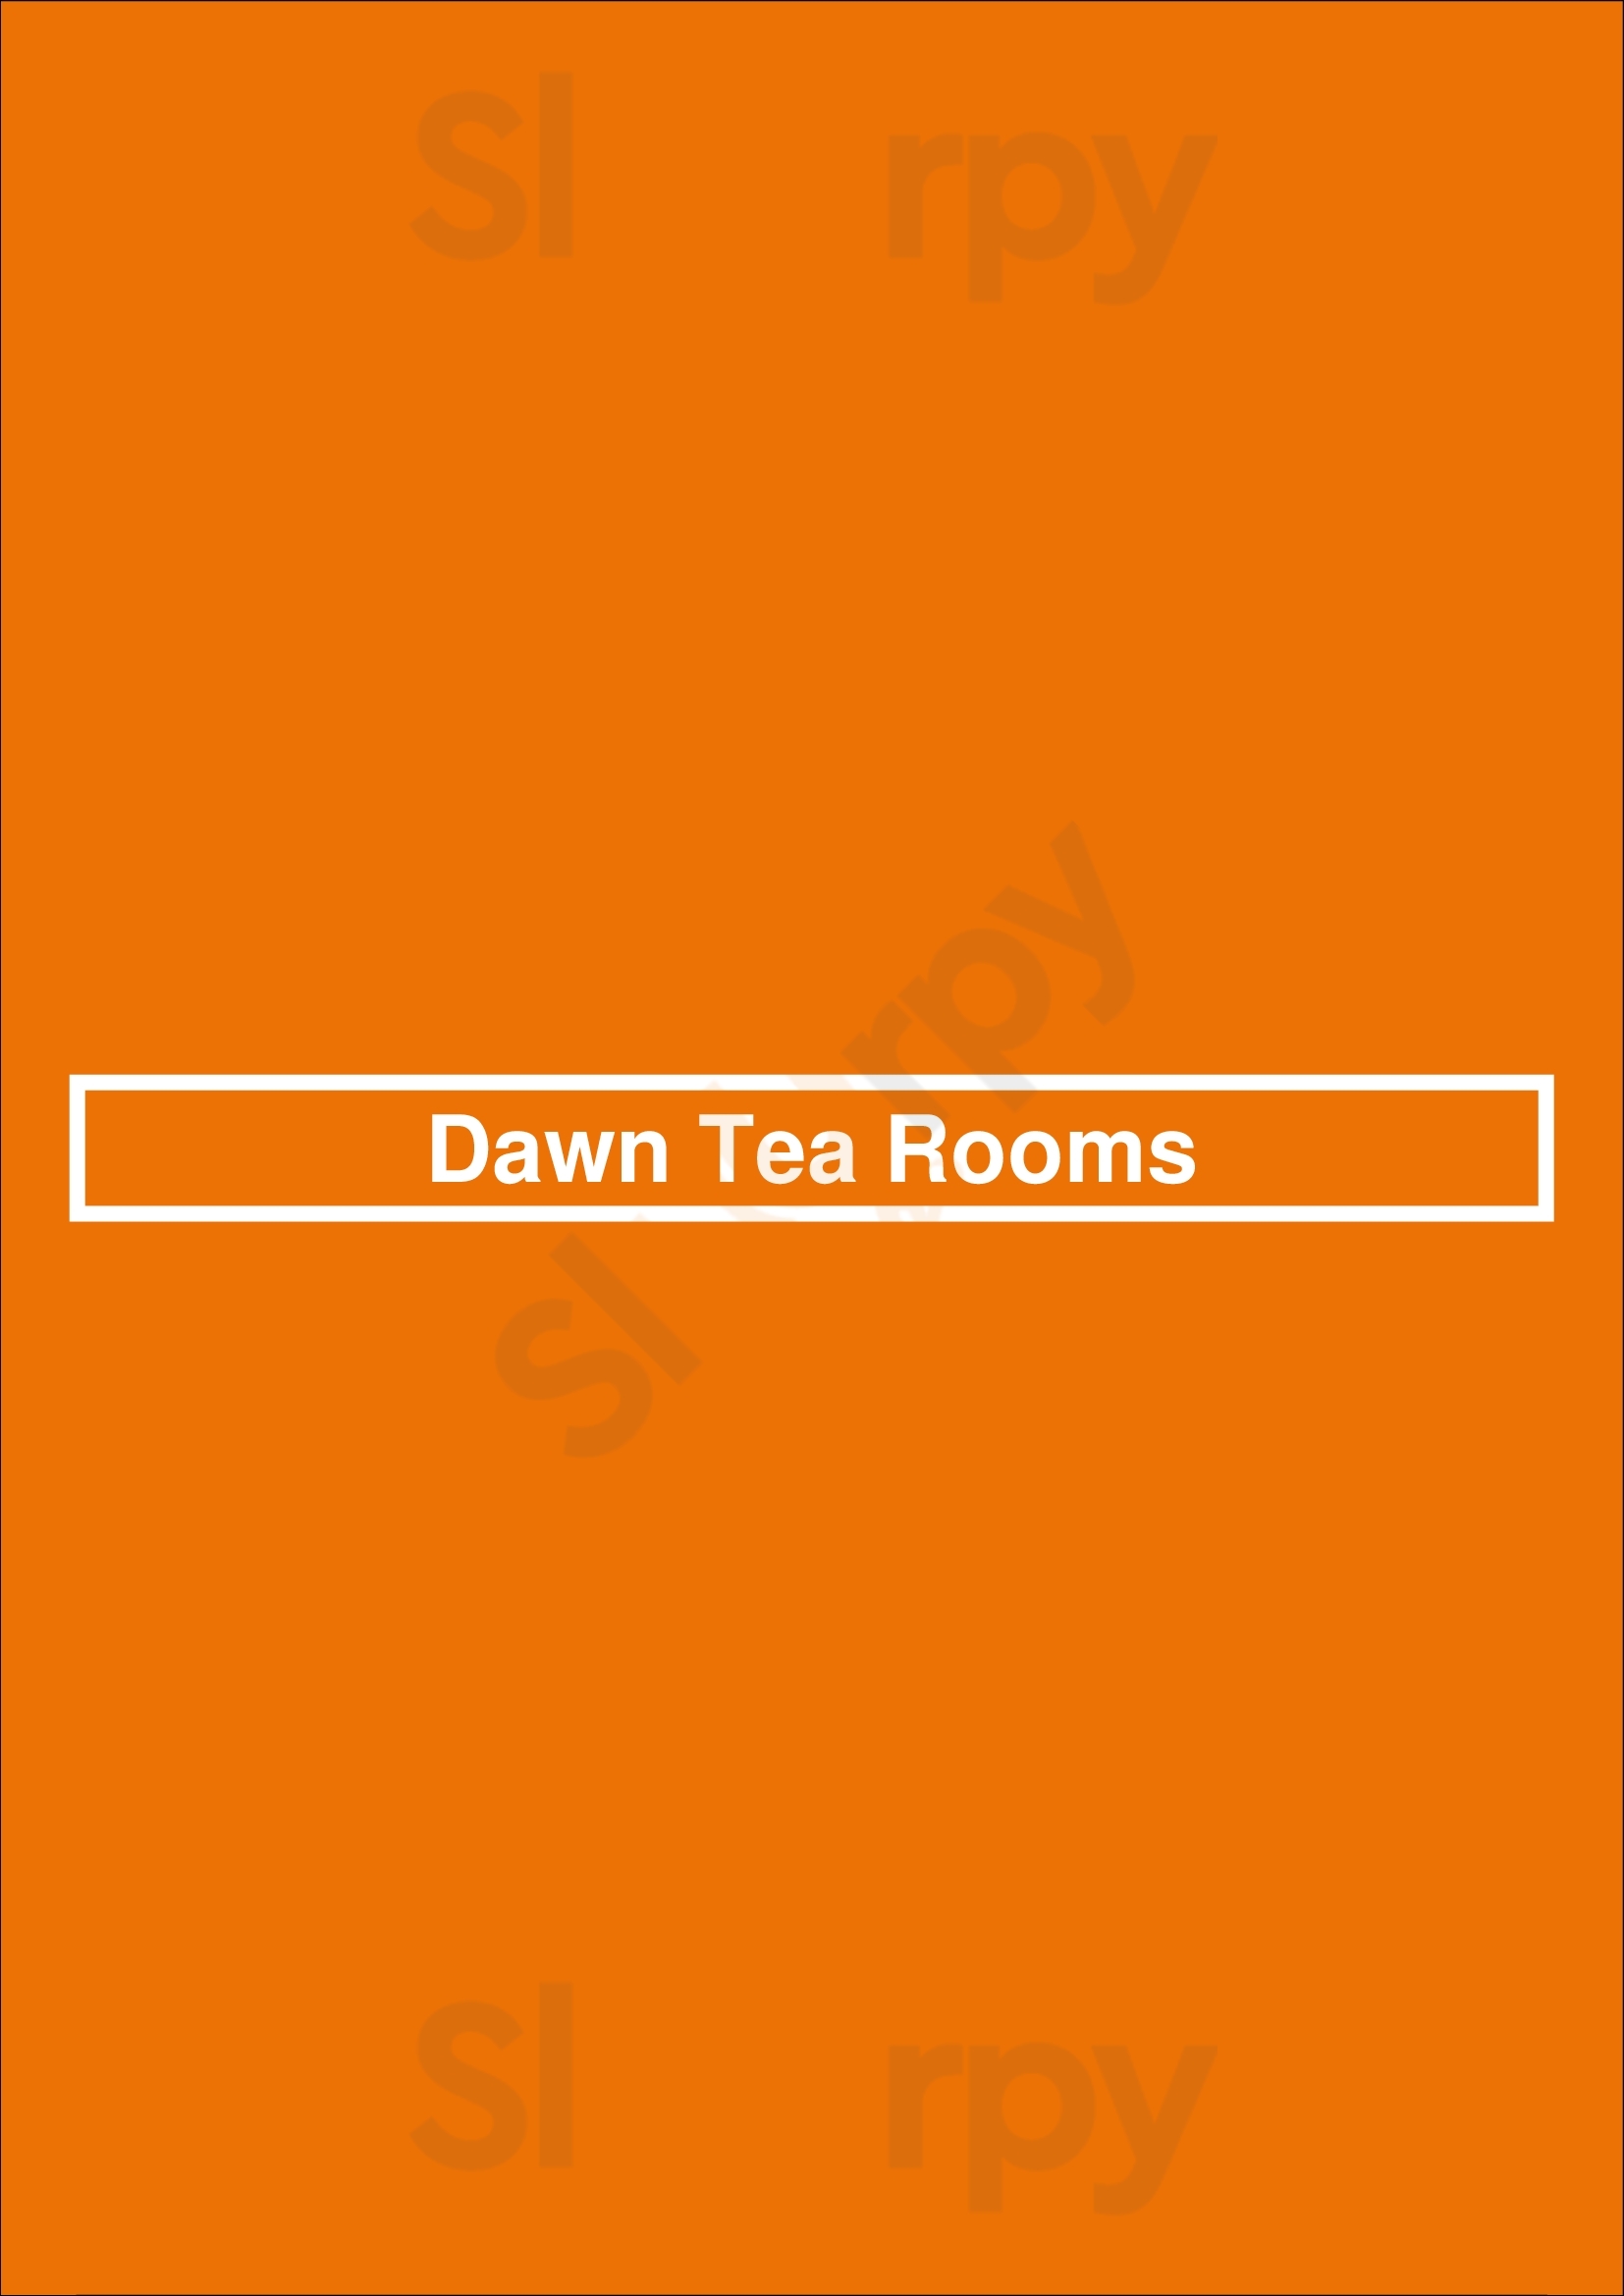 Dawn Tea Rooms Brisbane Menu - 1